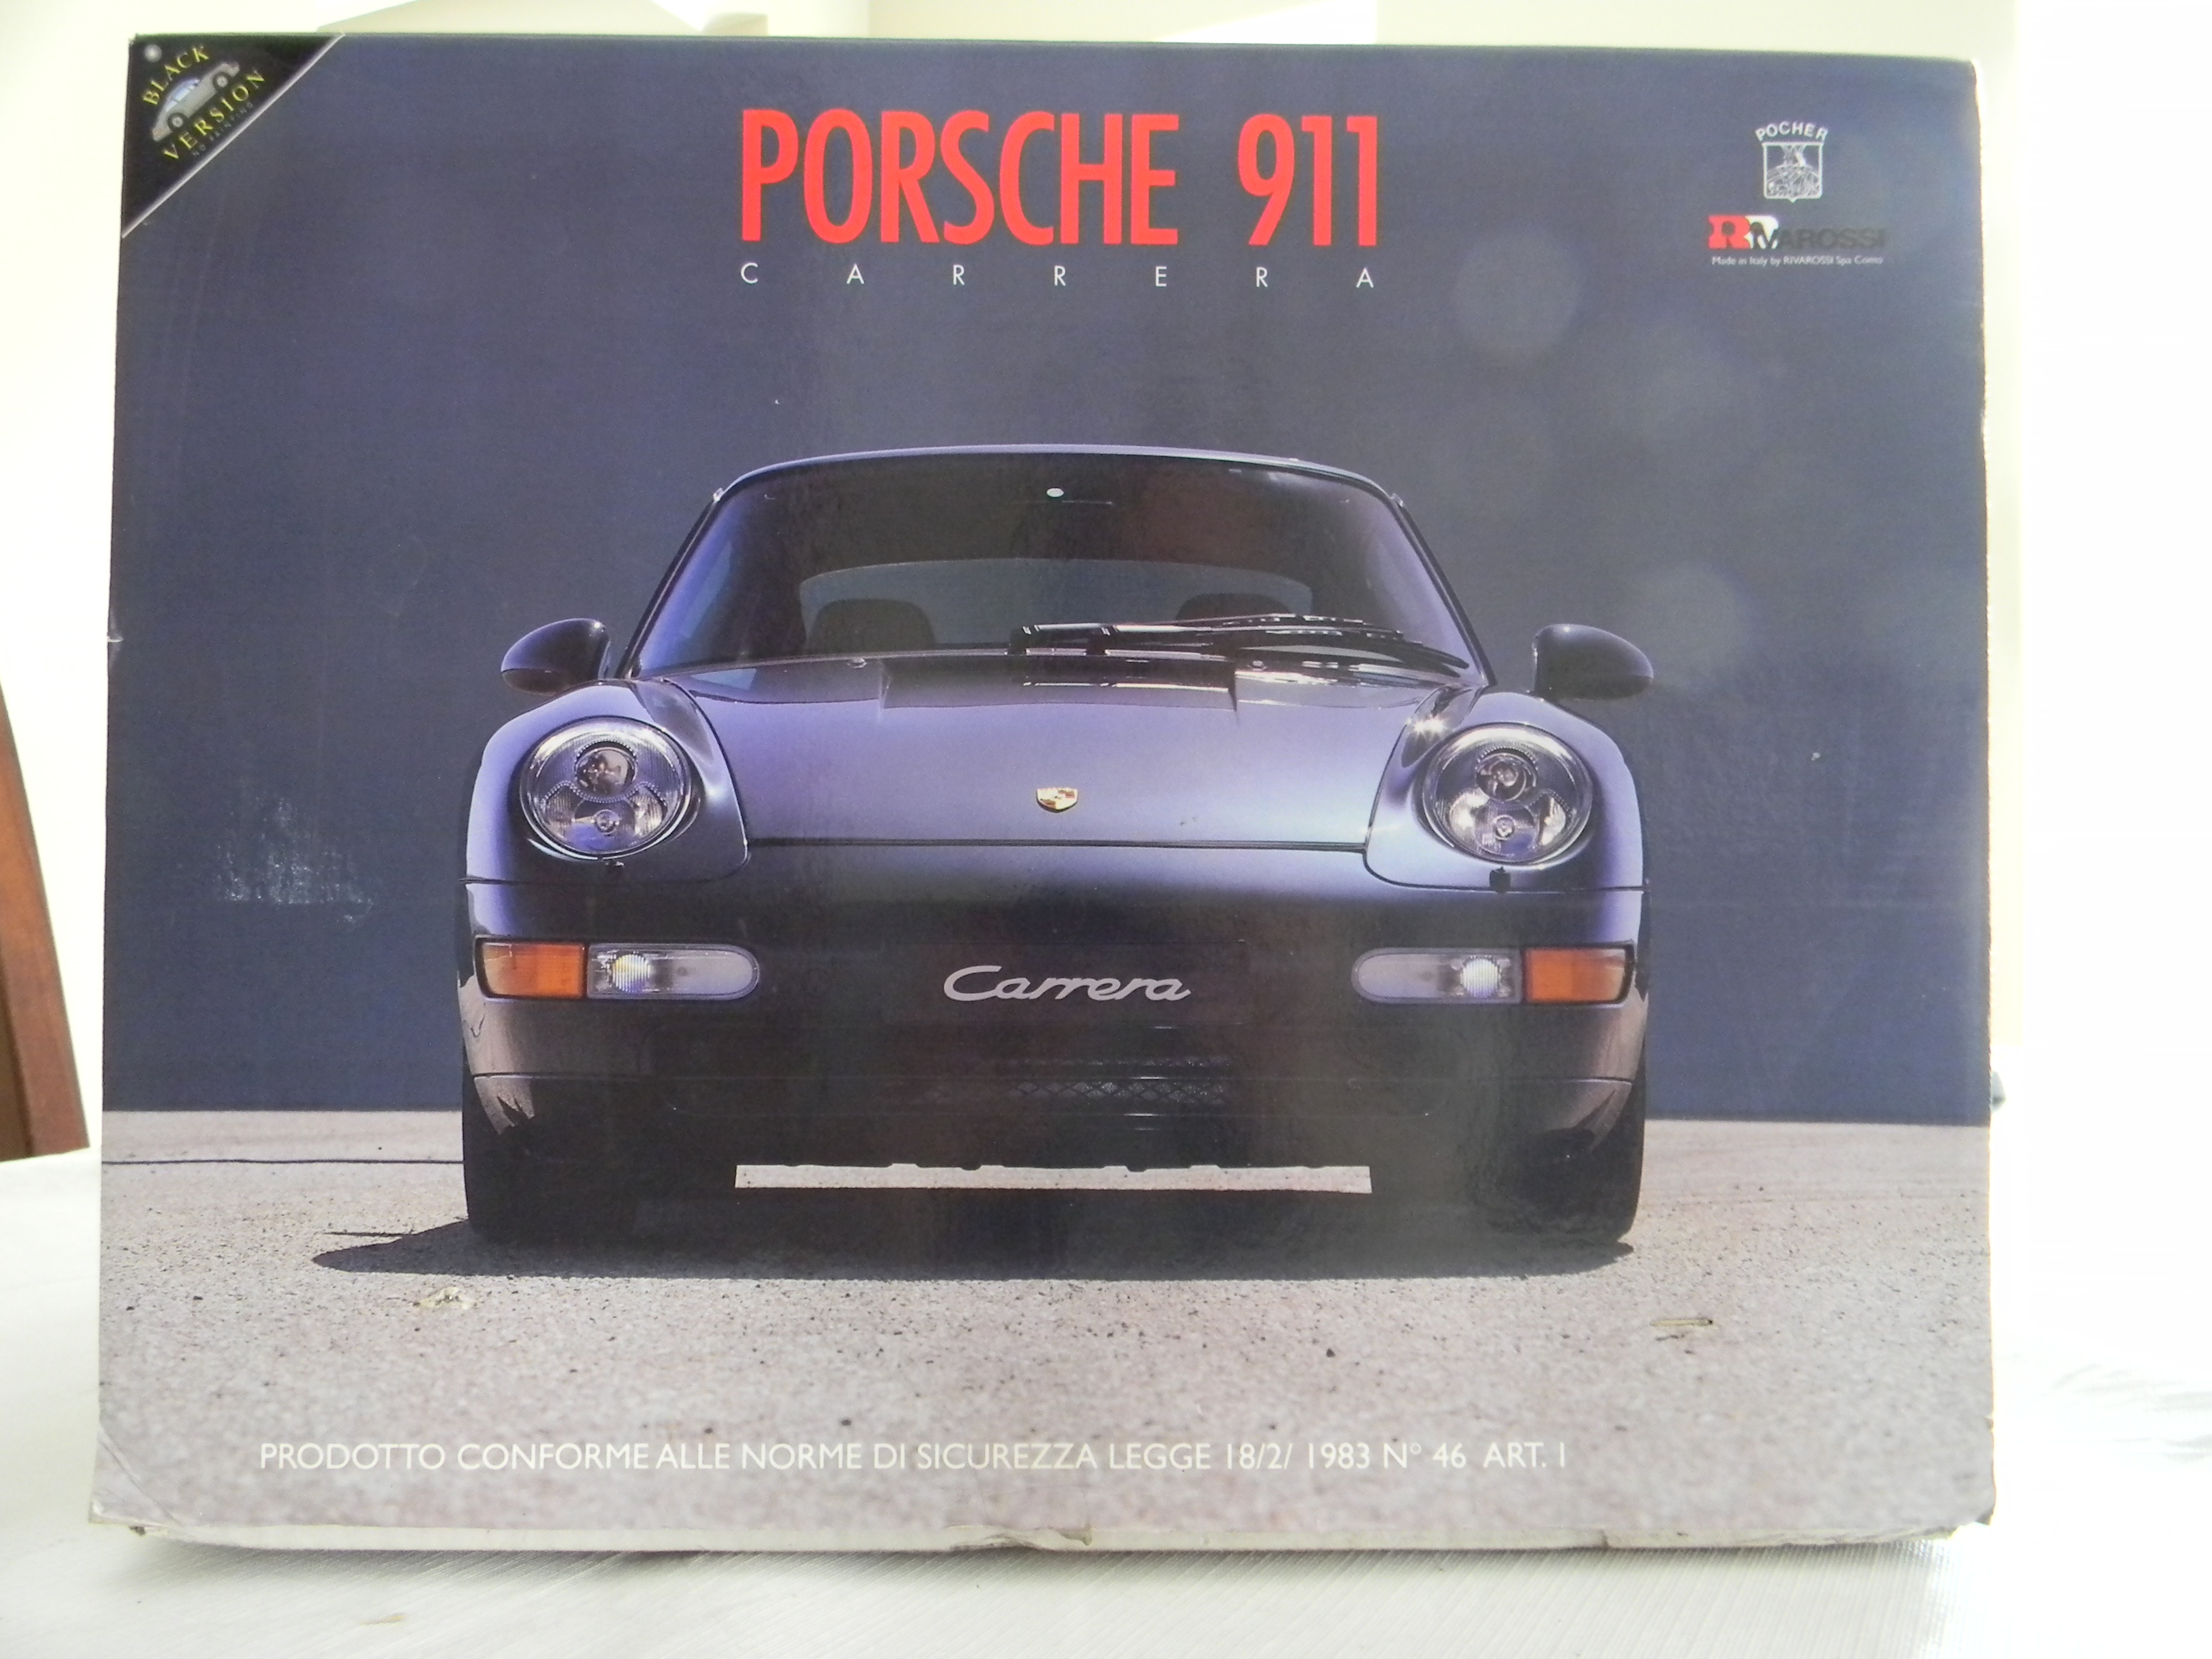 Pocher Porsche 911 1/8 Scale. - General Automotive Talk (Trucks and Cars) -  Model Cars Magazine Forum